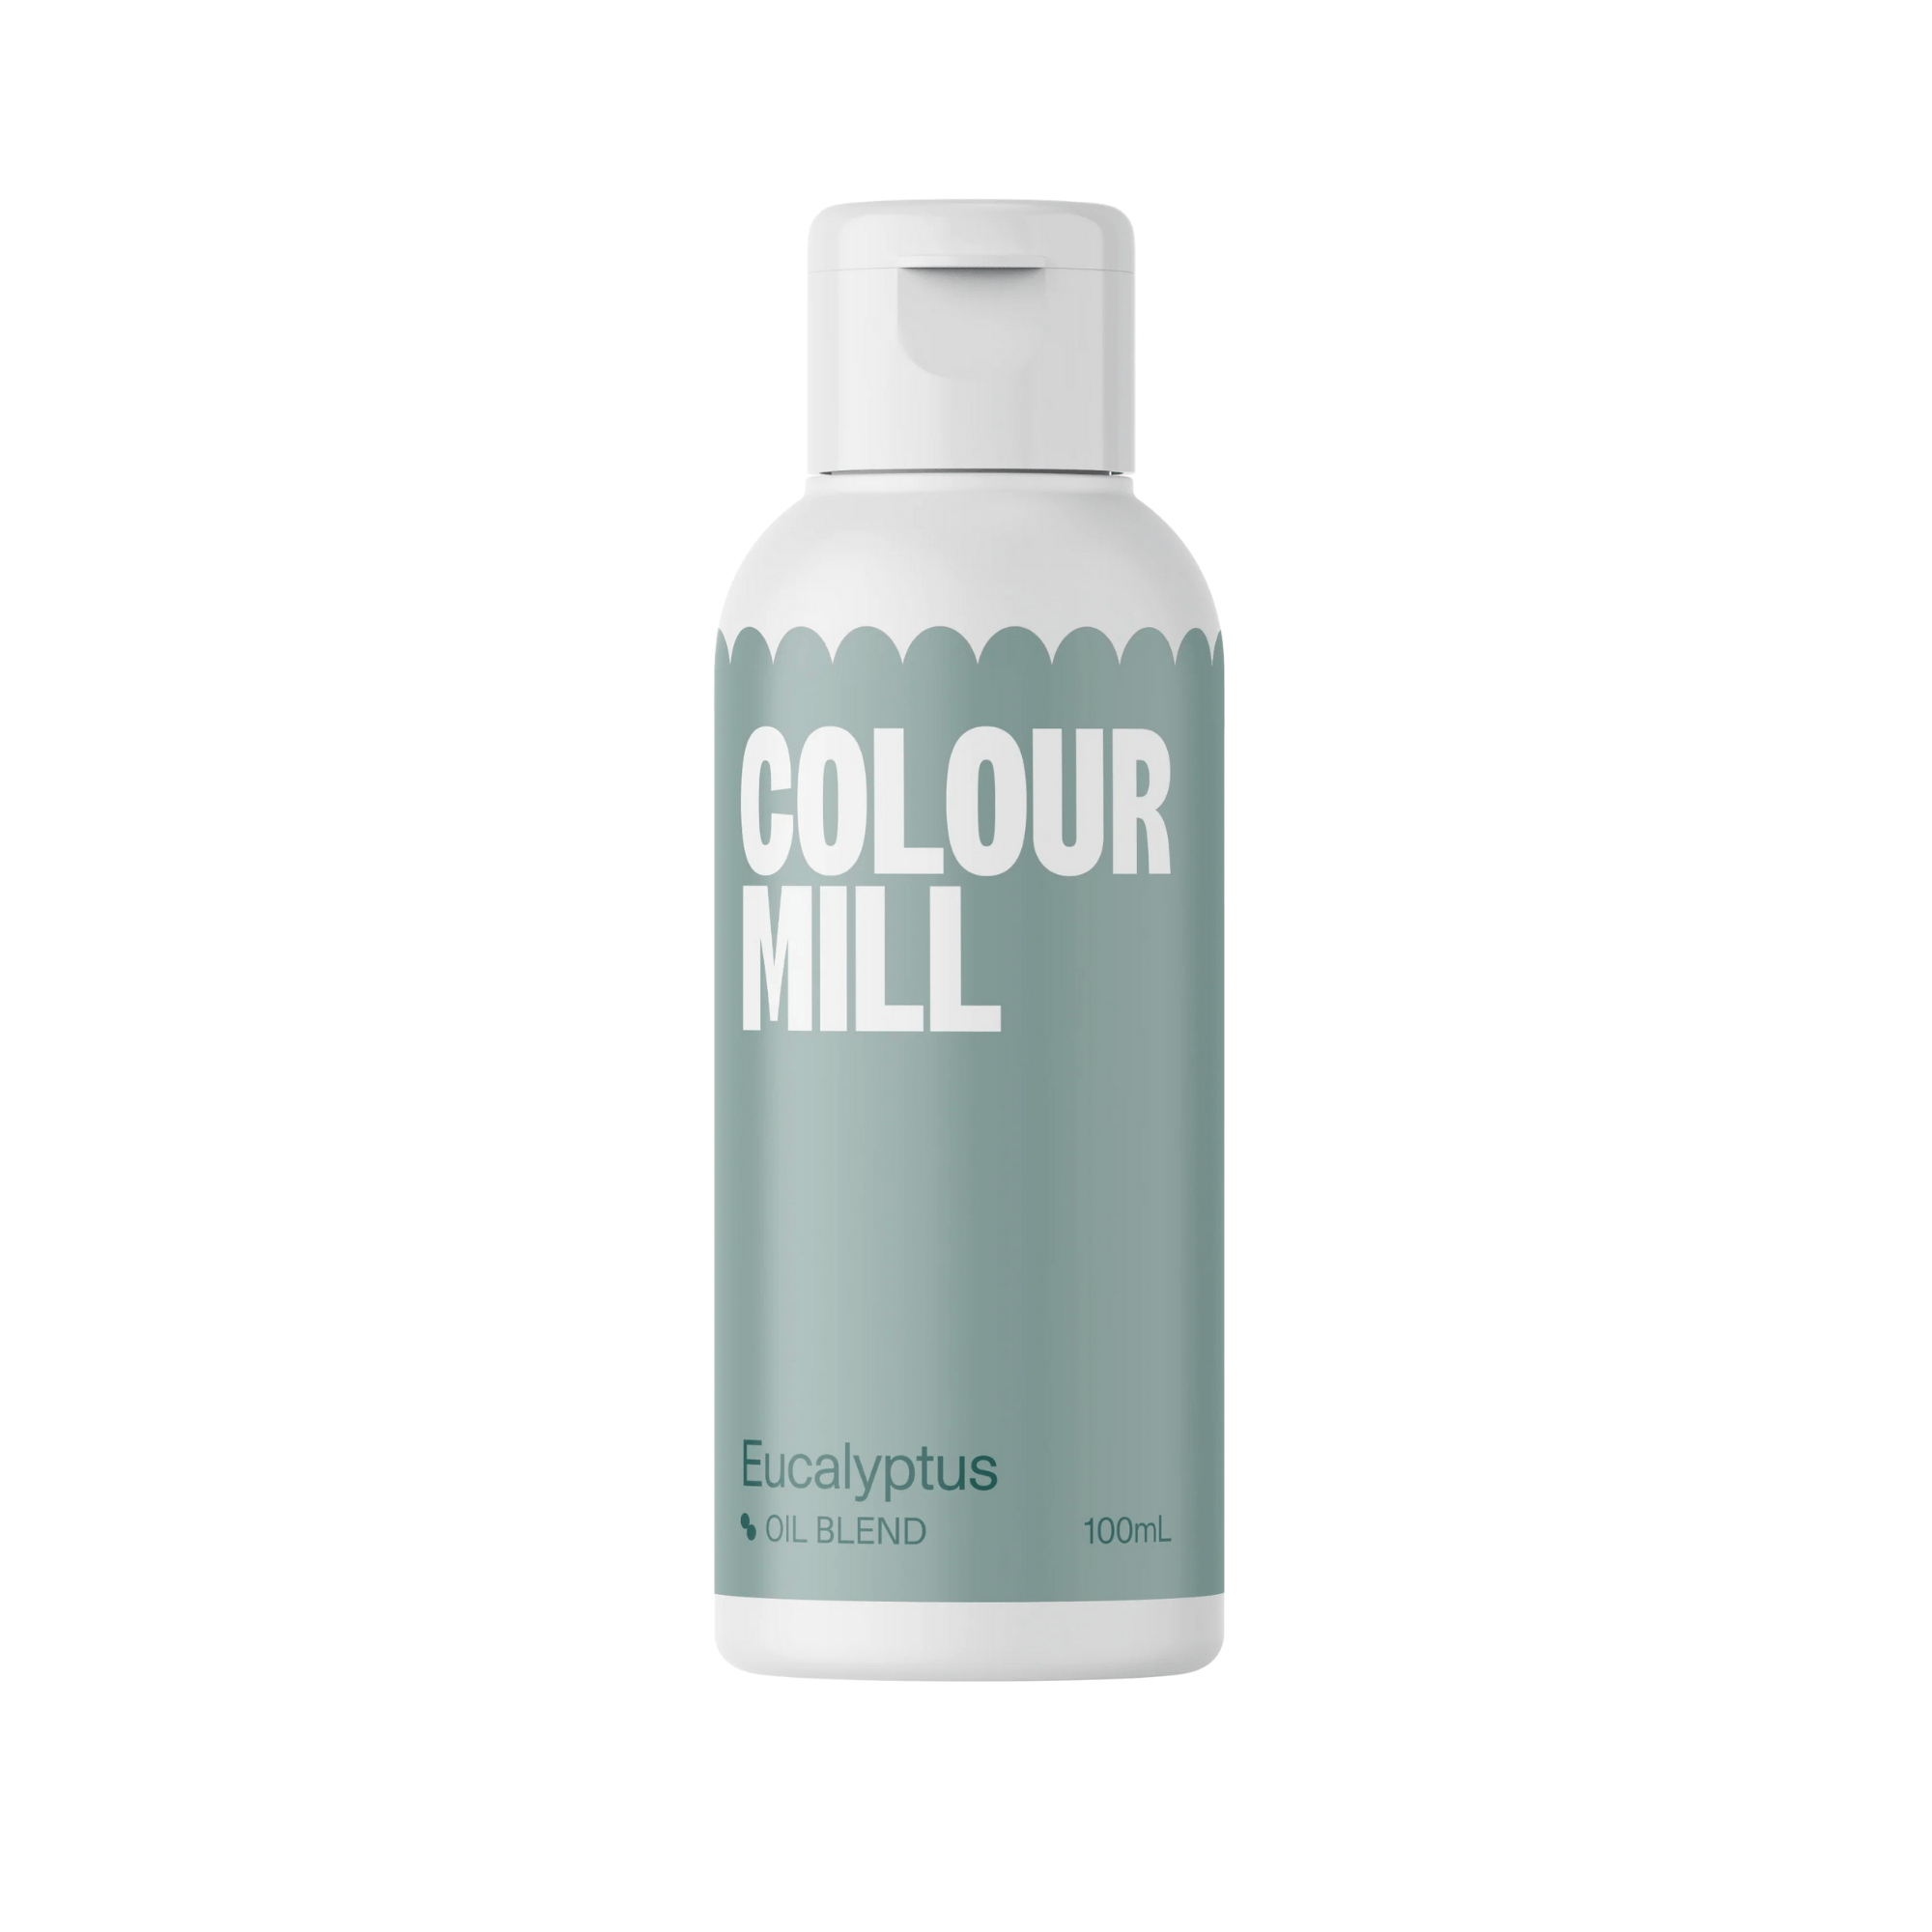 Happy Sprinkles Streusel 100ml Colour Mill Eucalyptus - Oil Blend